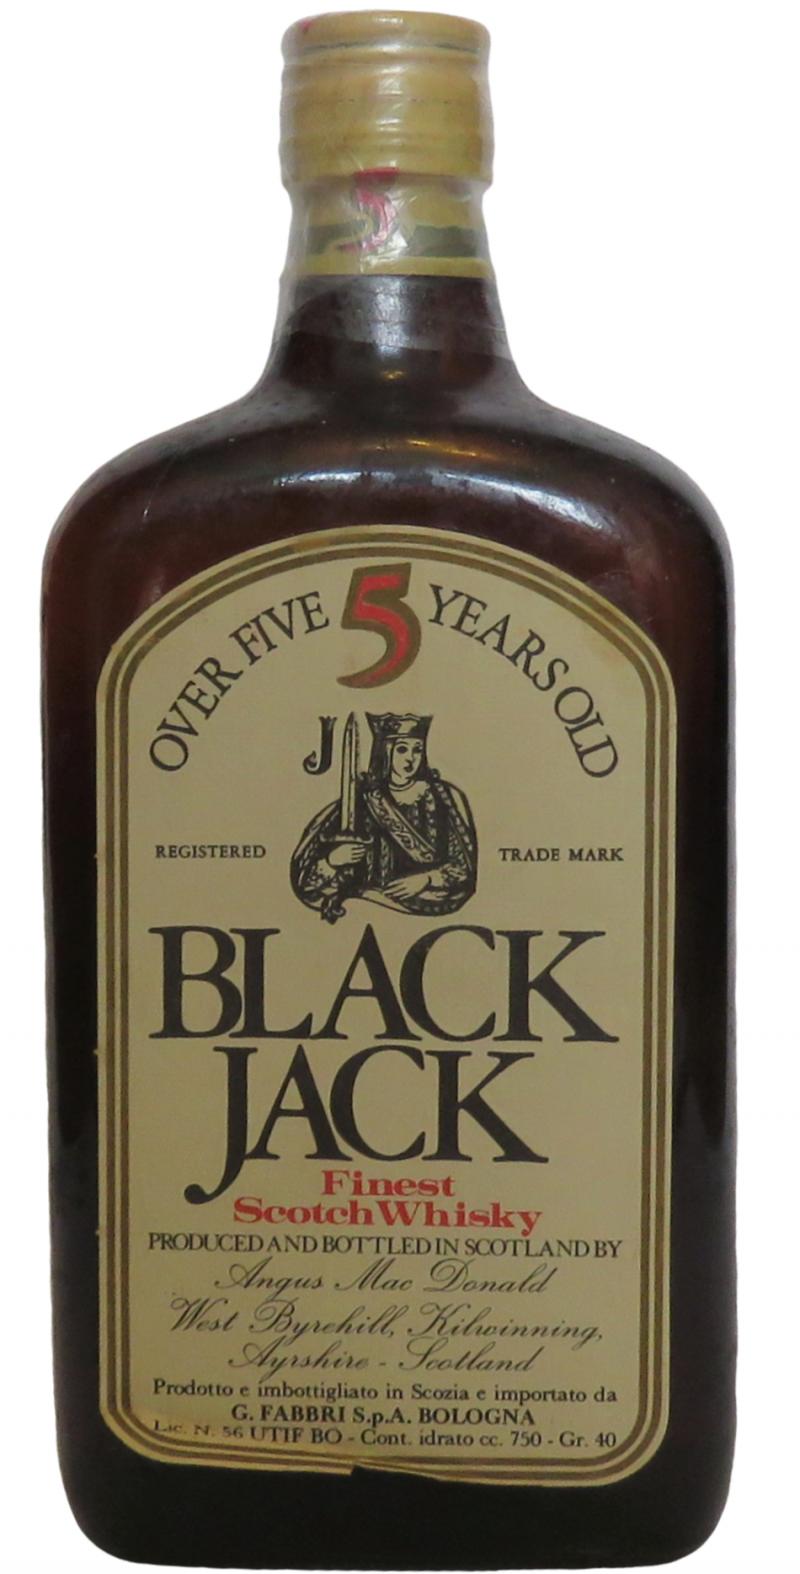 Black Jack 05-year-old